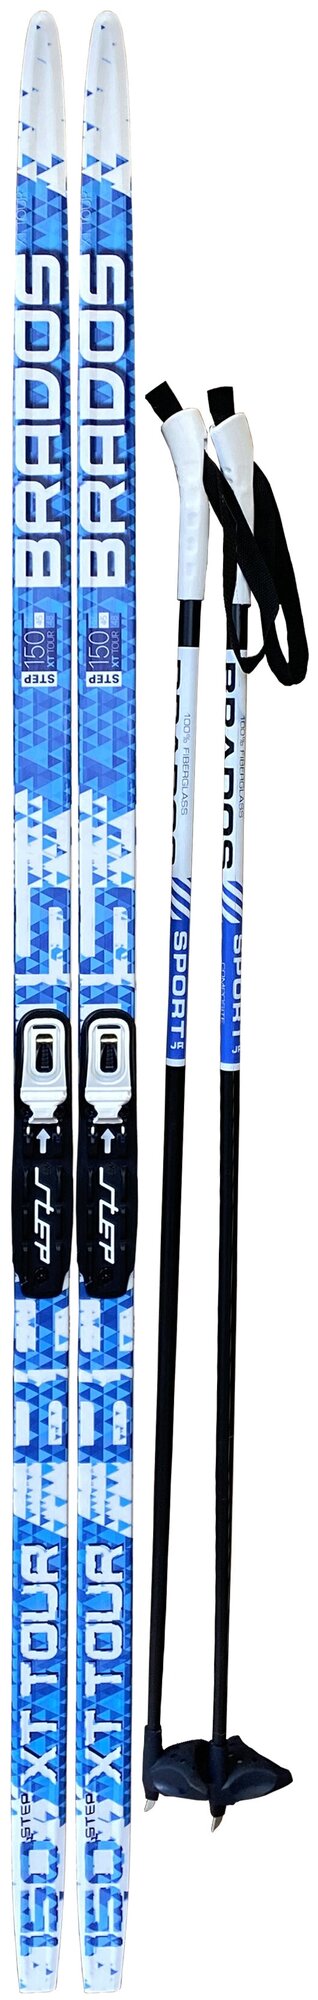 Лыжный комплект STC Brados XT Tour Blue 150см STEP NNN (лыжи + палки(110) + крепления)